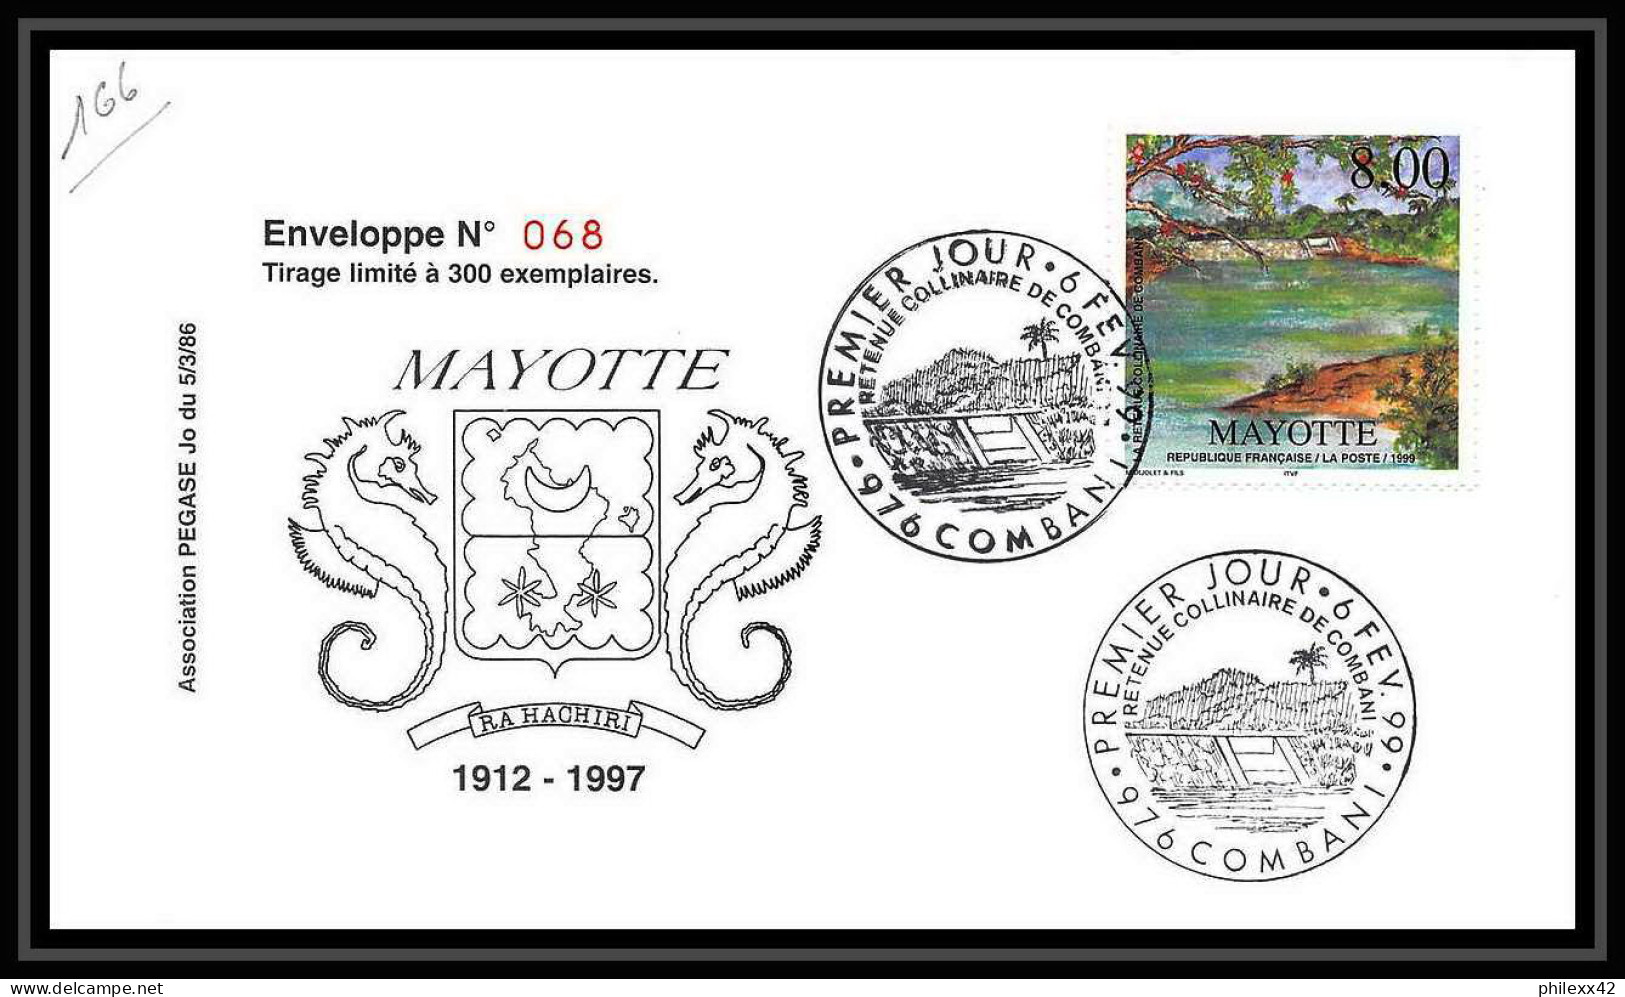 5228/ pegase tirage numerote 56/300 y&t 70 combani mayotte 1999 fdc premier jour lettre cover